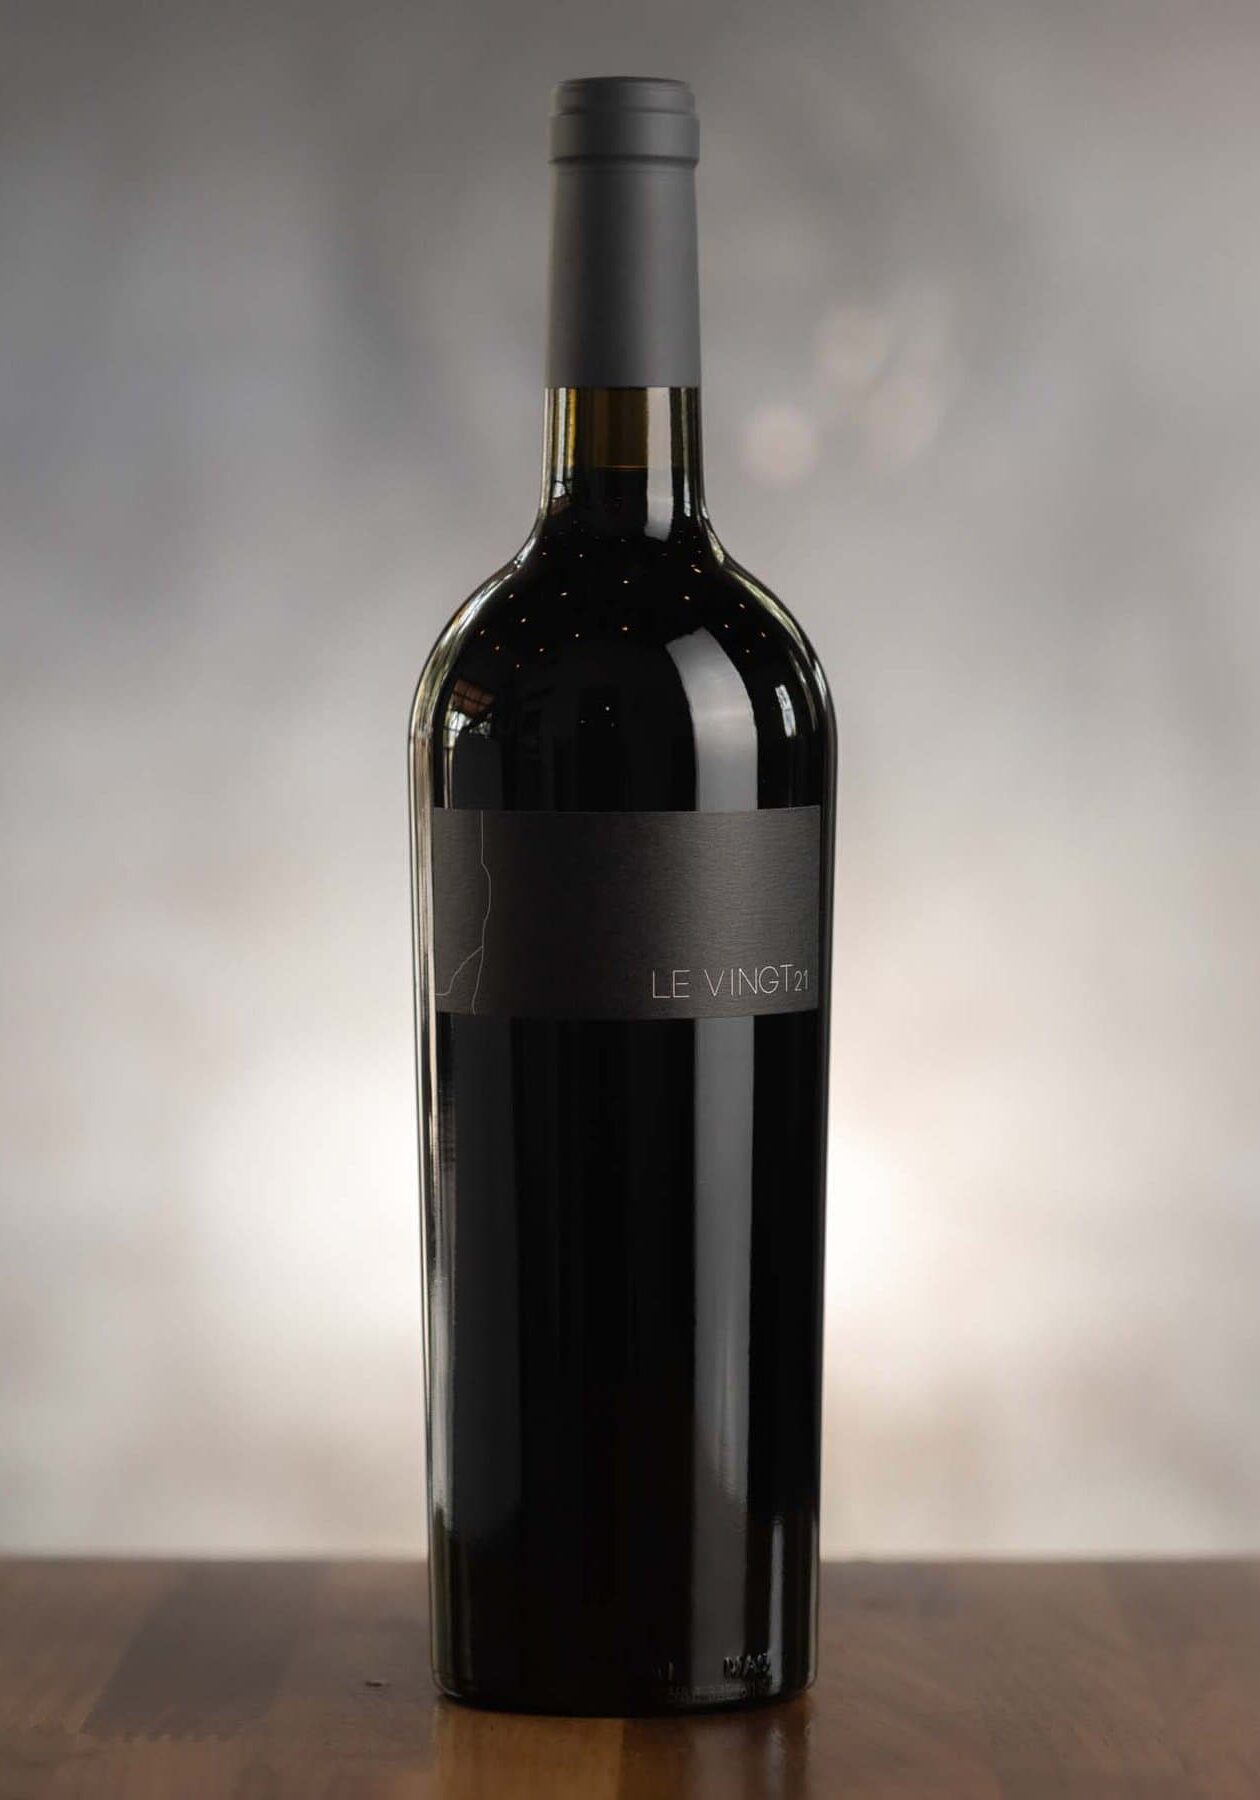 A bottle of Le Vingt BENOM wine